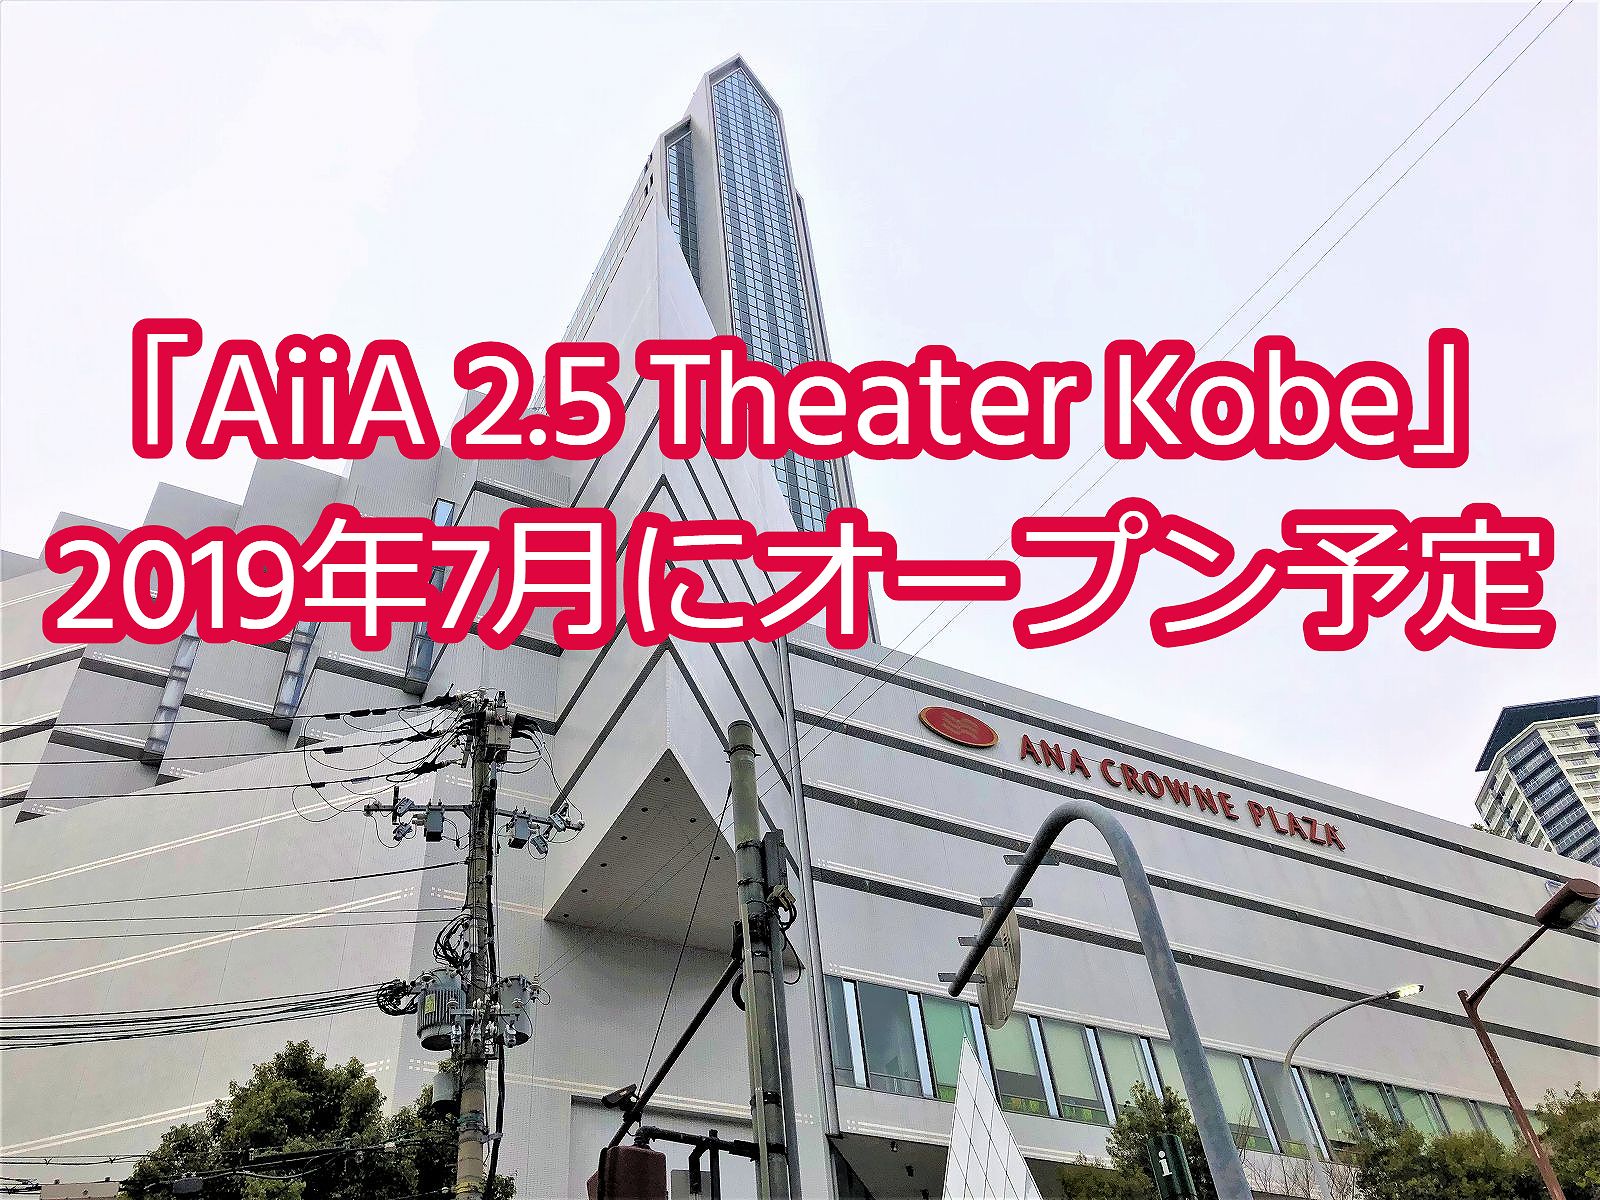 Aiia 2 5 Theater Kobe が19年7月 2 5次元ミュージカル専用劇場として新神戸オリエンタルアベニュー2階にオープン予定 新神戸オリエンタルアベニュー アイアシアター 新規オープン 2 5次元 東灘ジャーナル